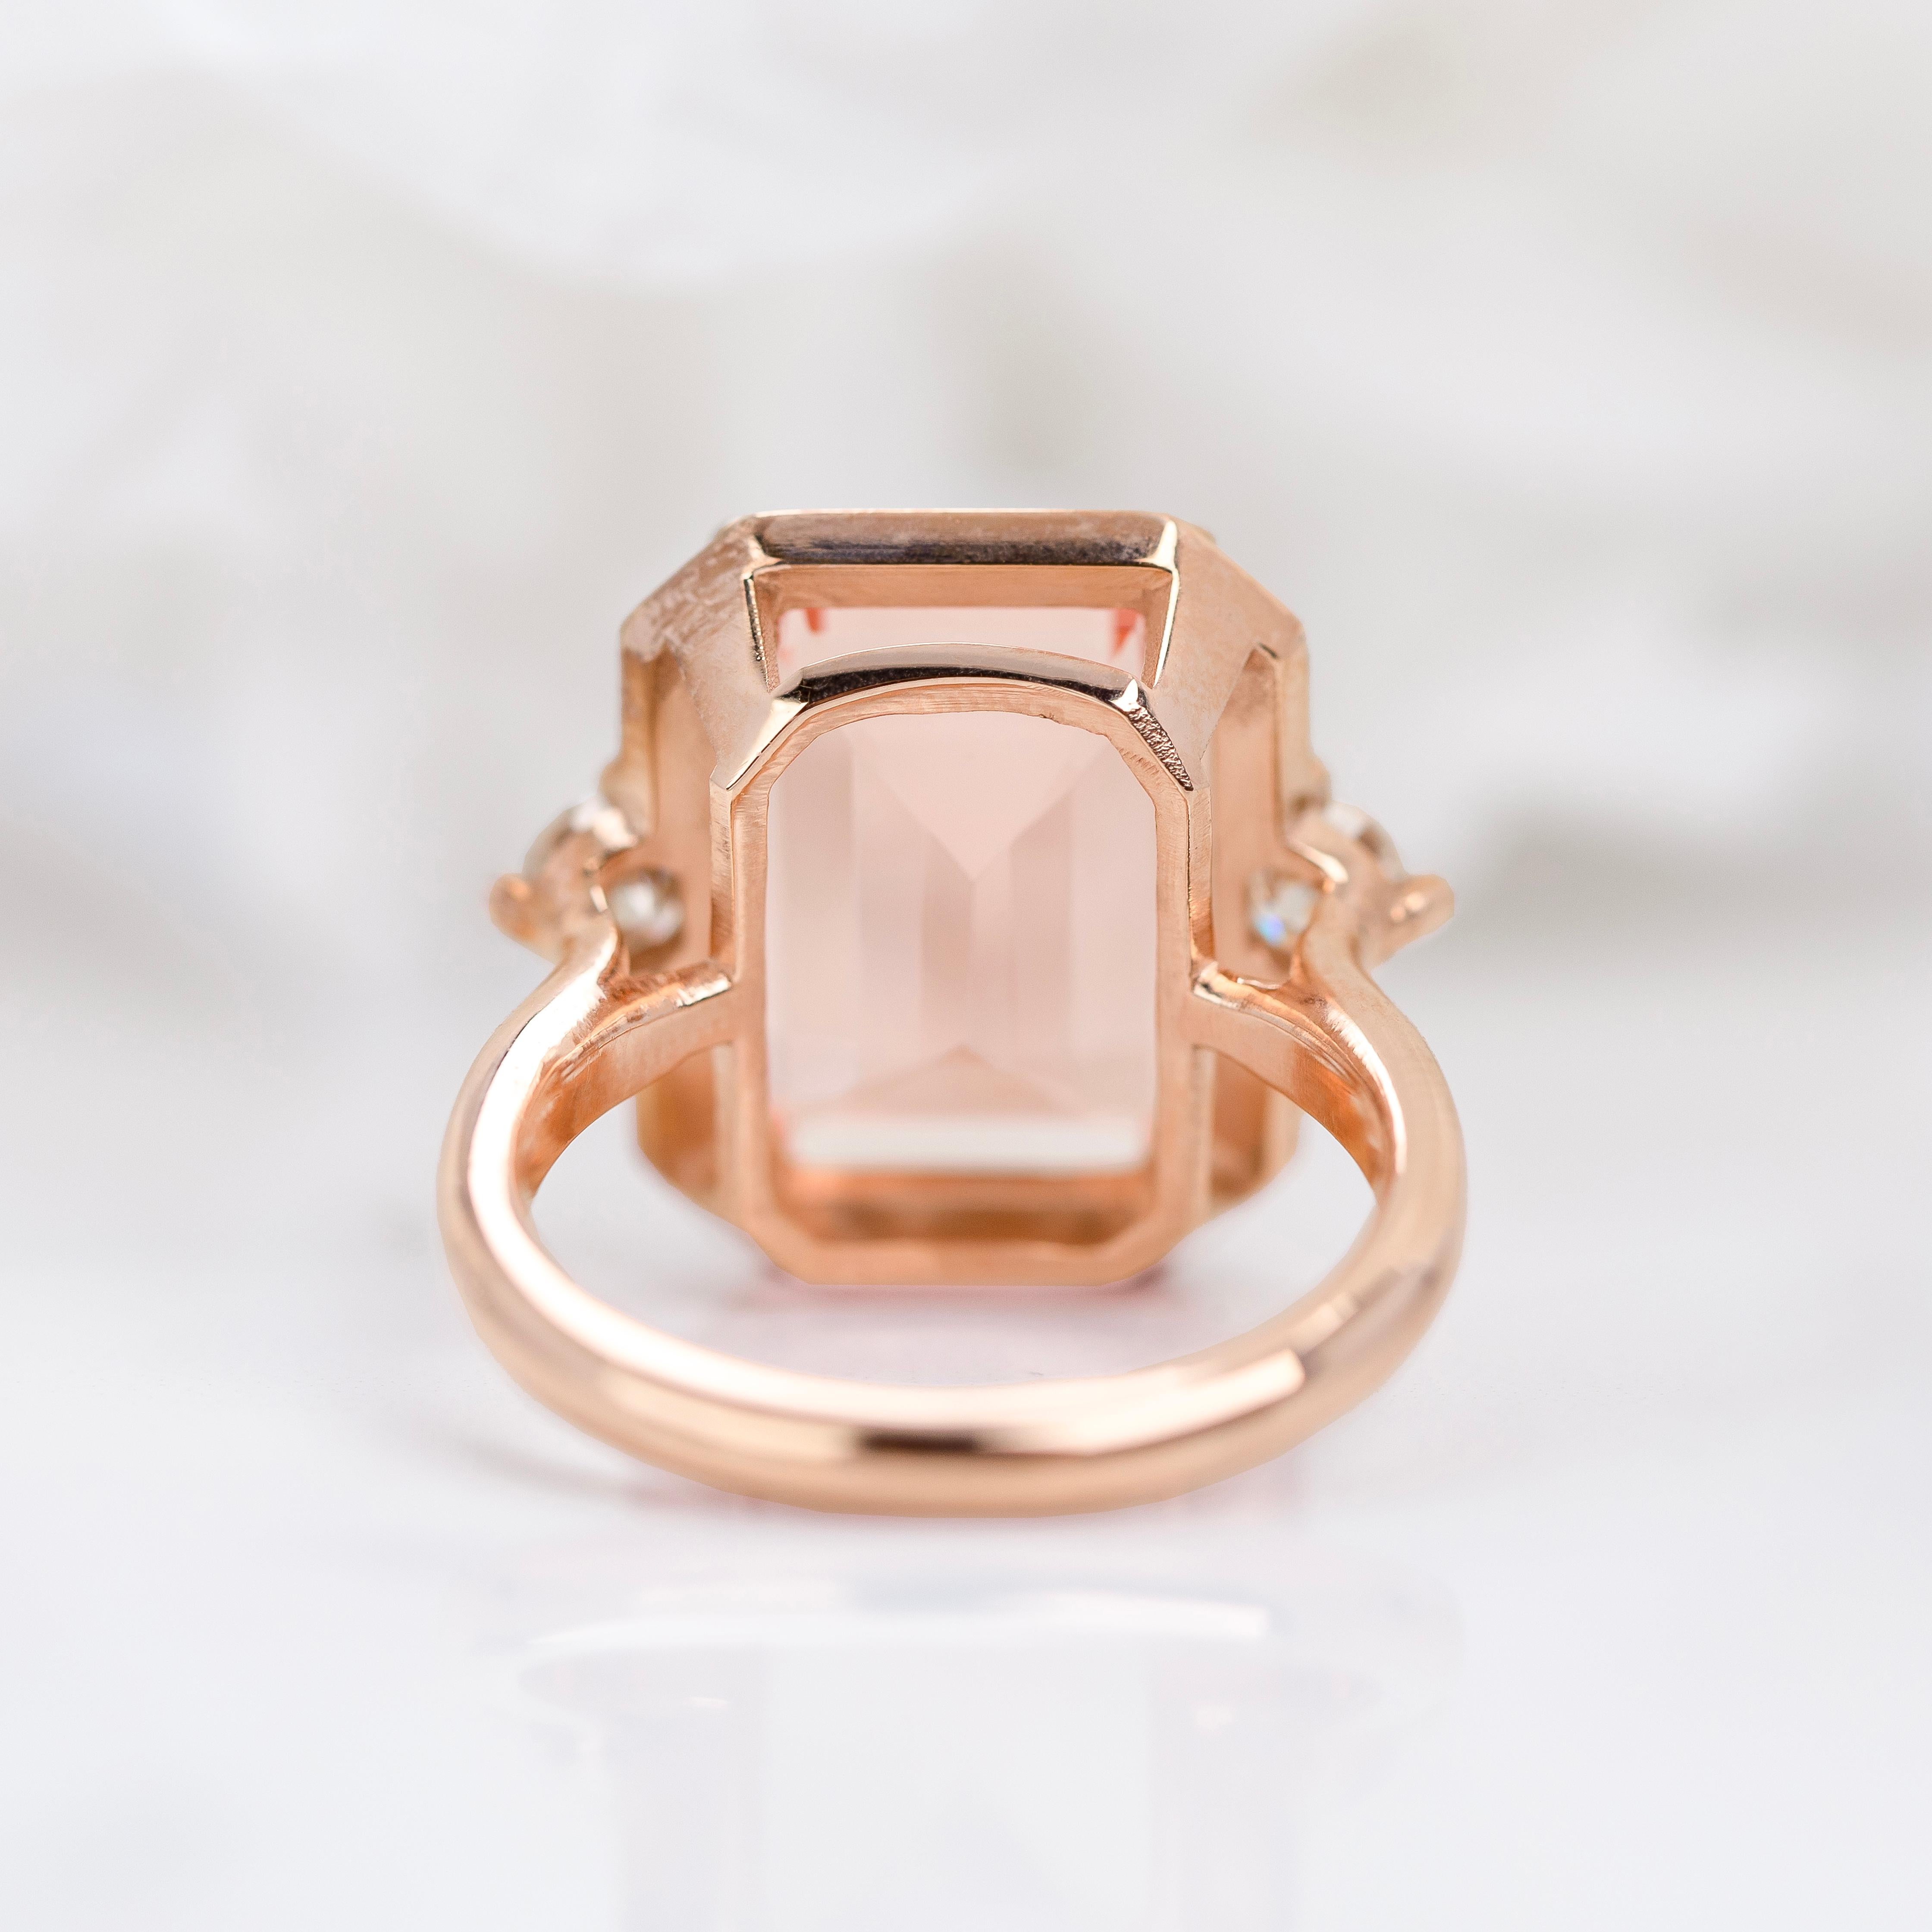 Women's or Men's Art Deco Style, Pink Quartz and Moissanite Stone Ring, 14K Gold Ring For Sale